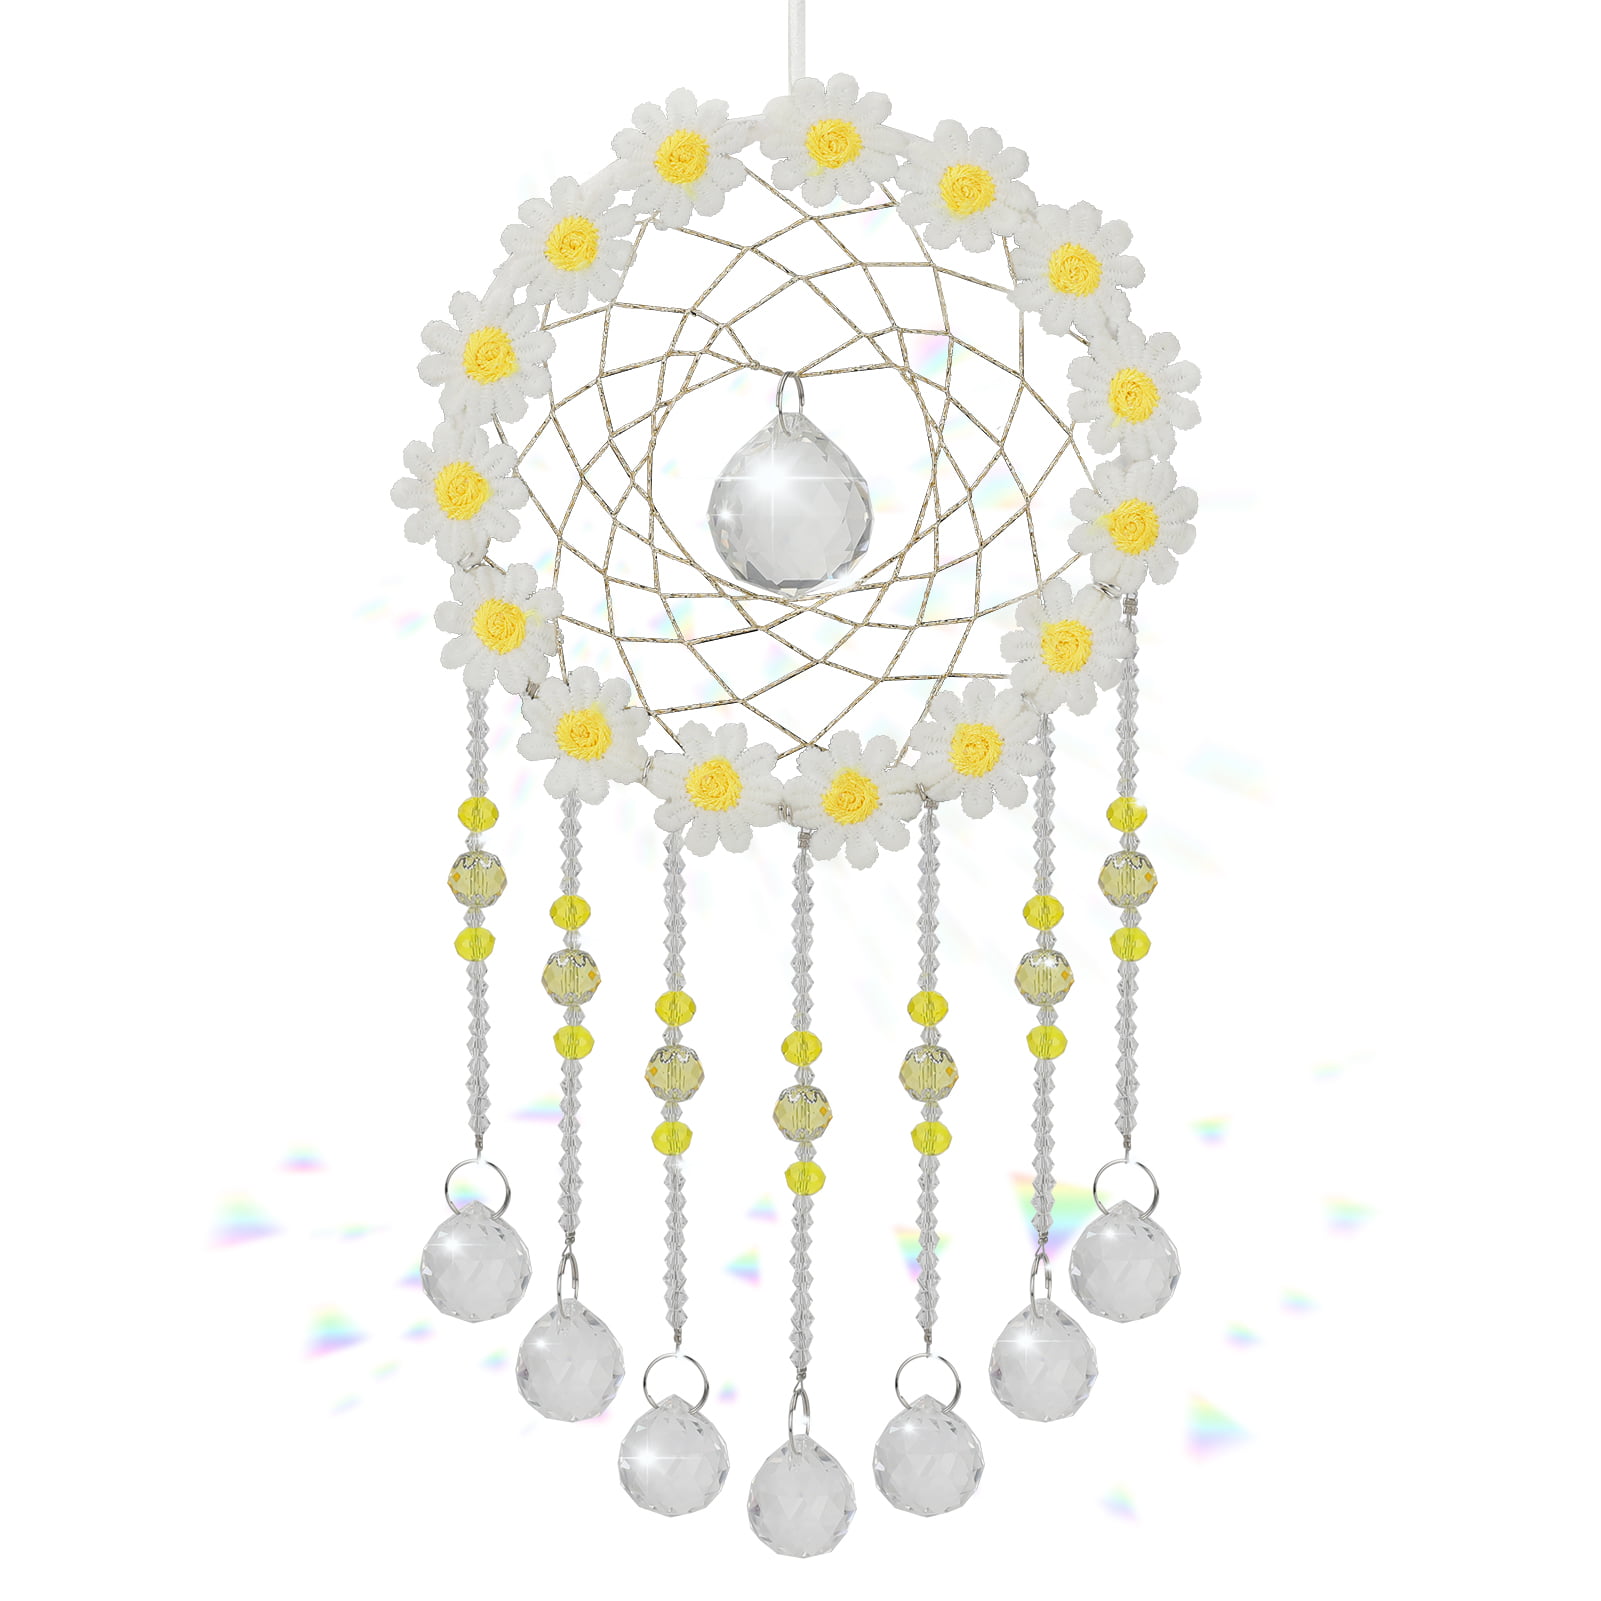 Details about   5pcs Crystal Chandelier Lamp Lighting Part Drops Pendants Balls Prisms Hanging 